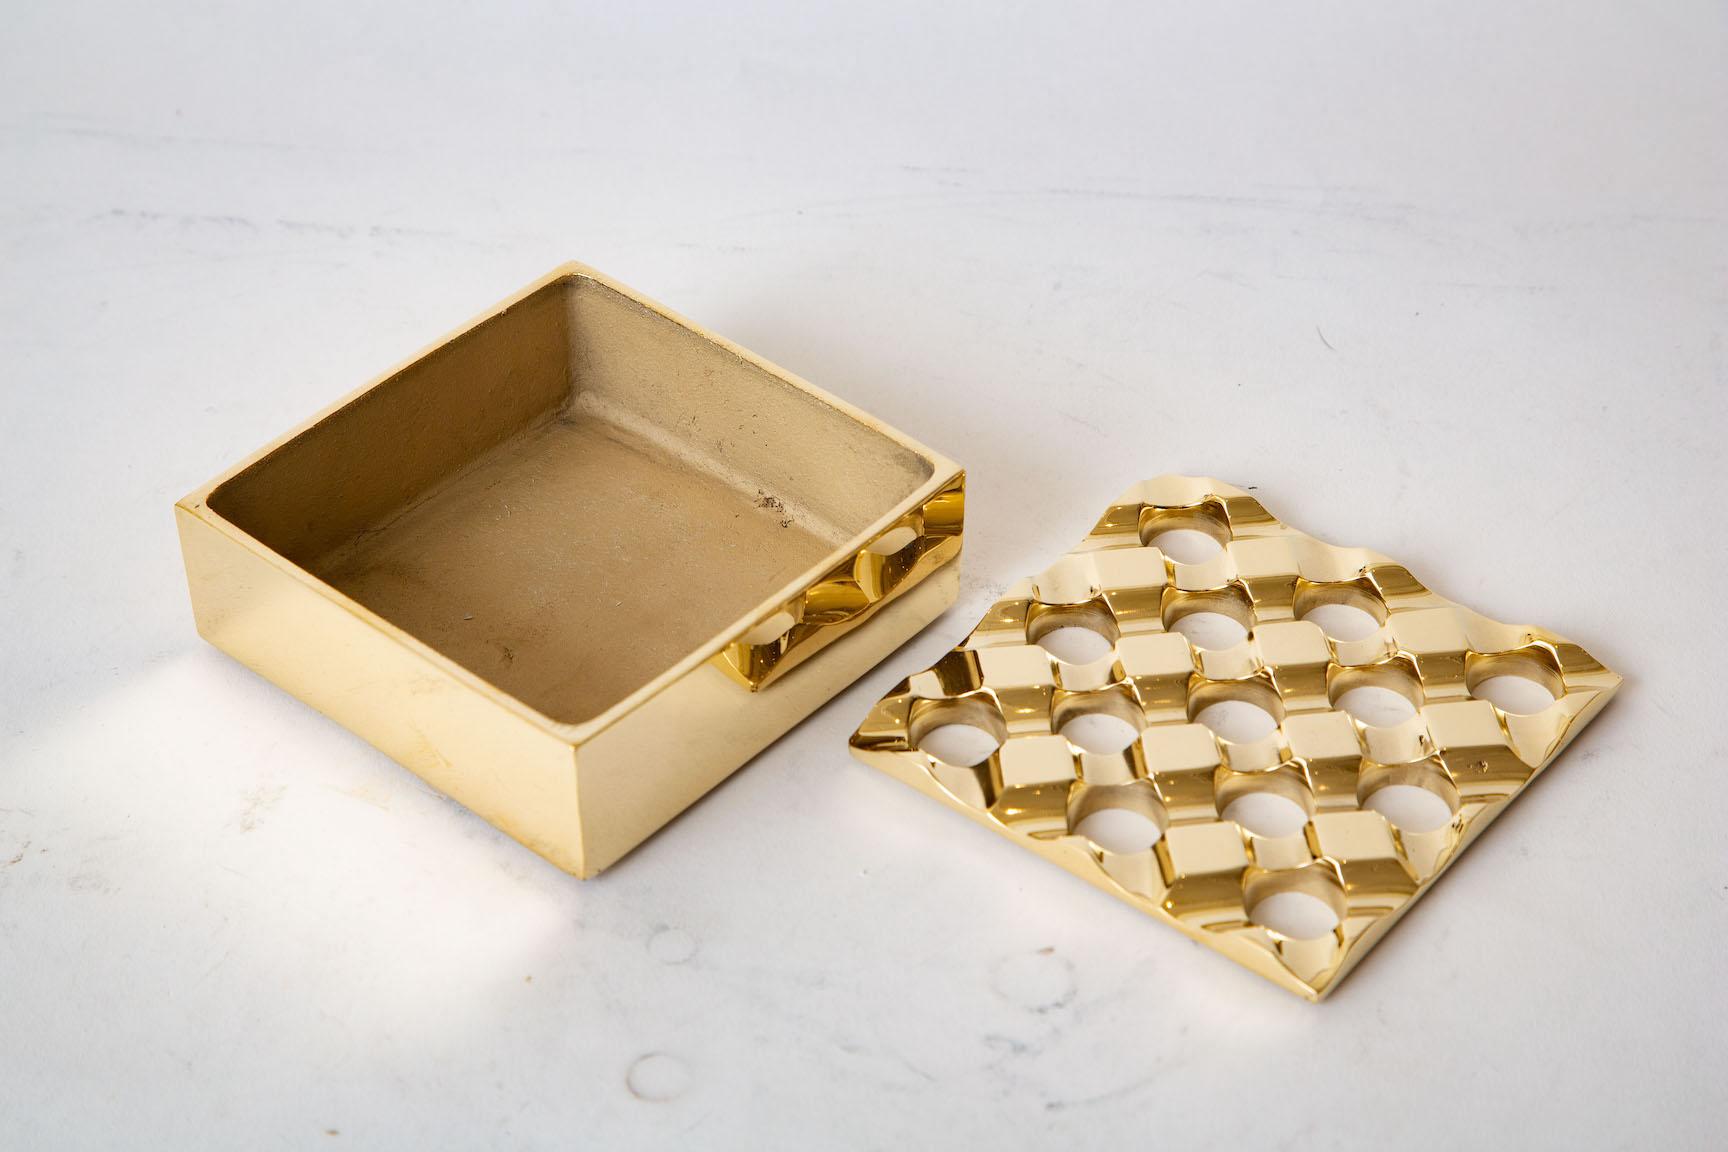 Solid Brass Ashtray or Desk Accessory by Backstrom Holger & Bo Ljungberg Sweden 1